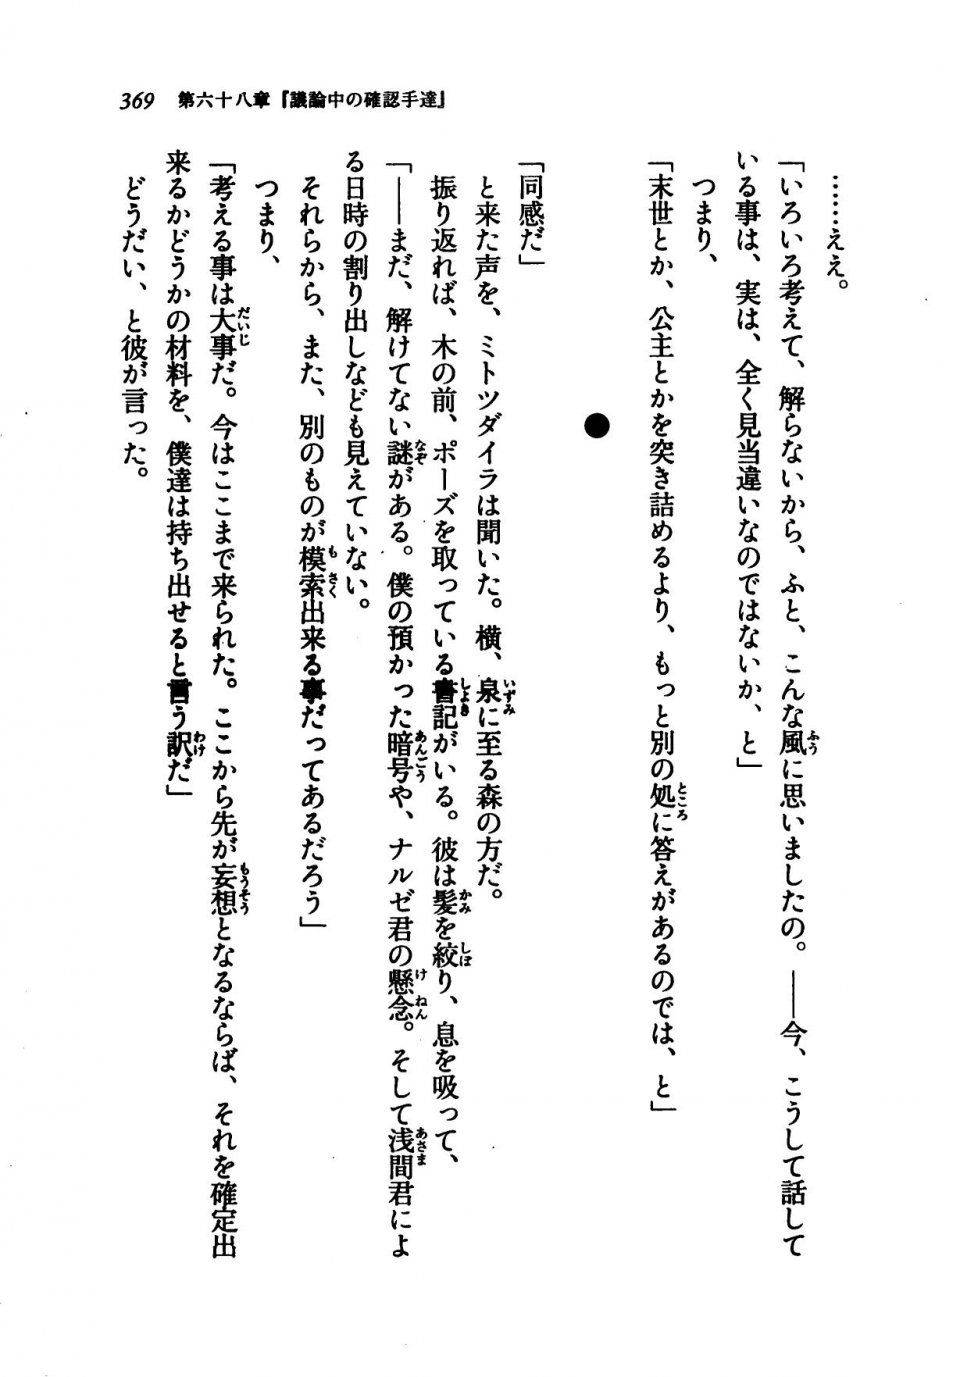 Kyoukai Senjou no Horizon LN Vol 21(8C) Part 1 - Photo #368